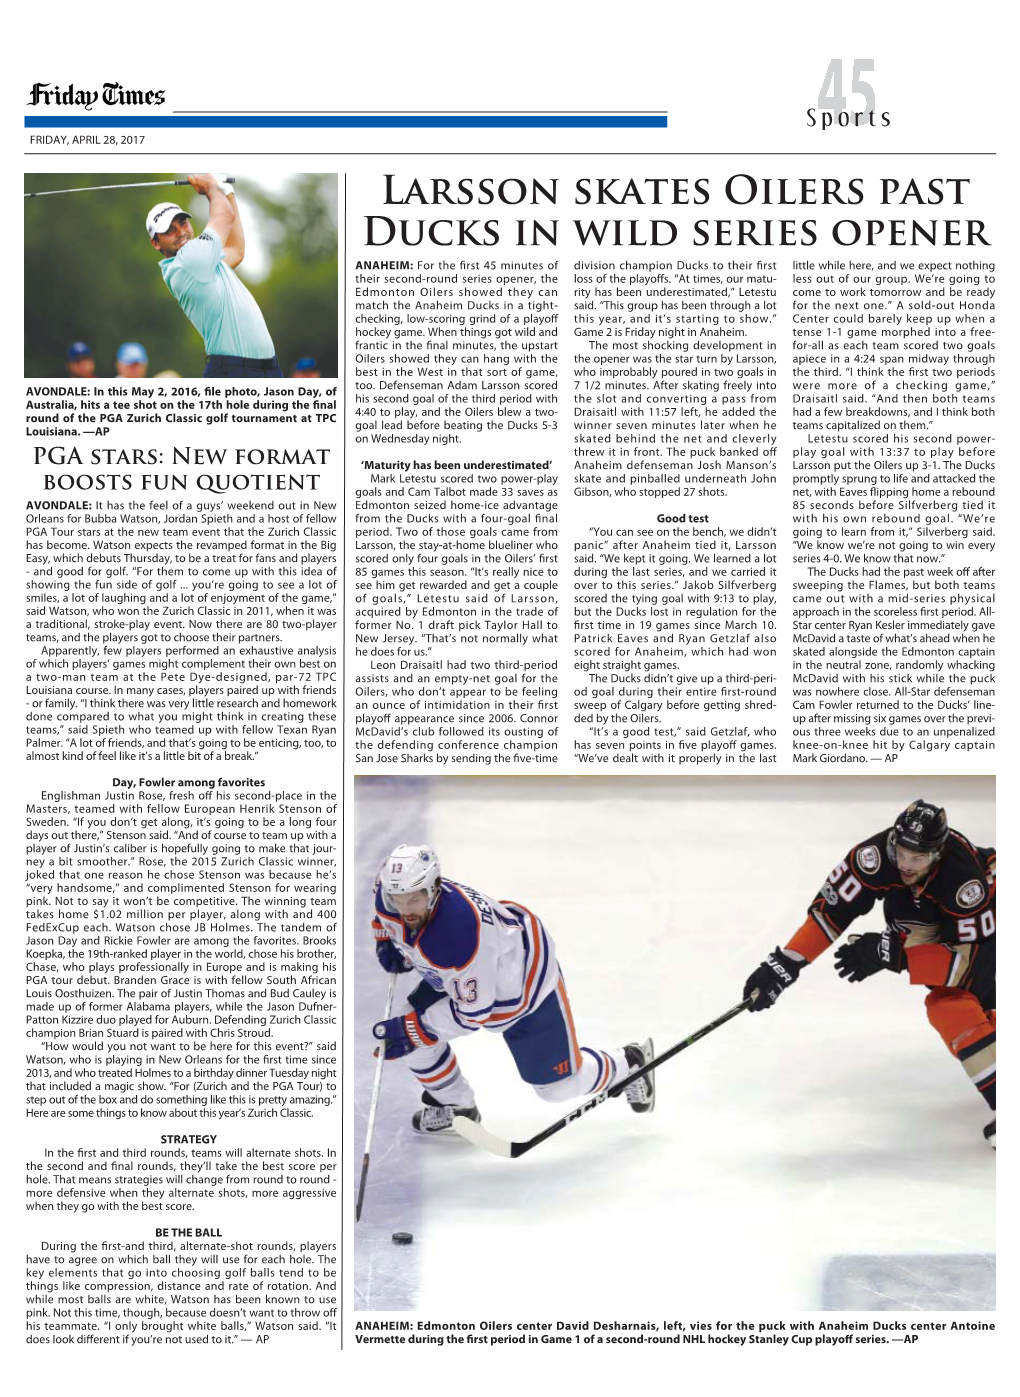 Larsson Skates Oilers Past Ducks in Wild Series Opener